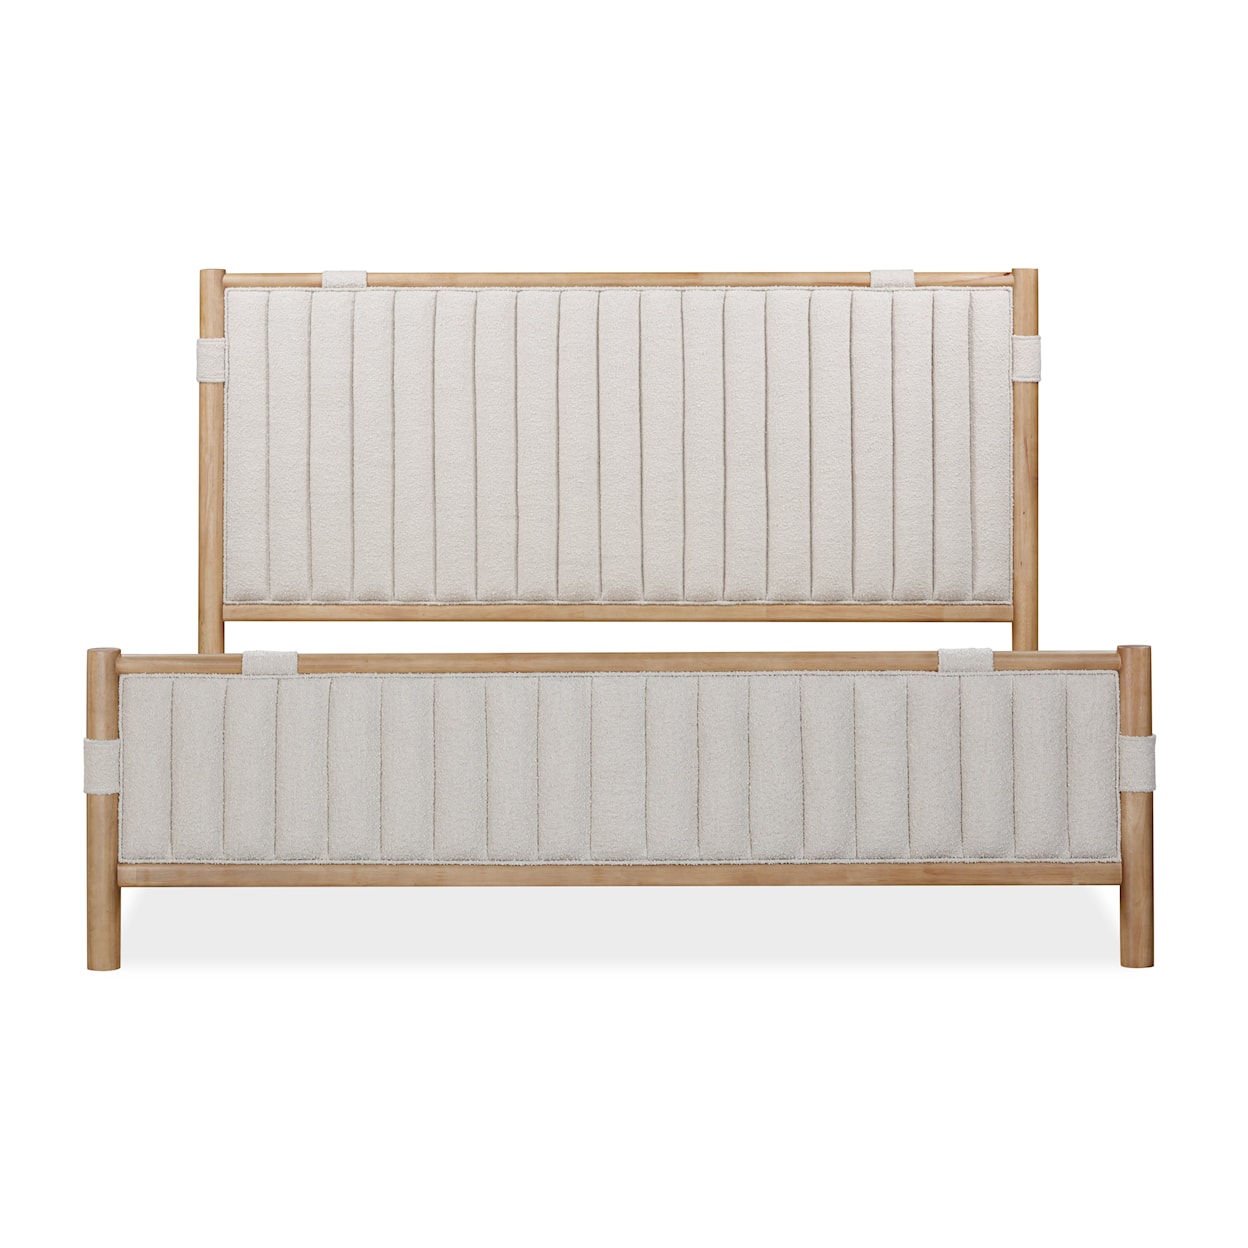 Modus International Furano Full Upholstered Panel Bed